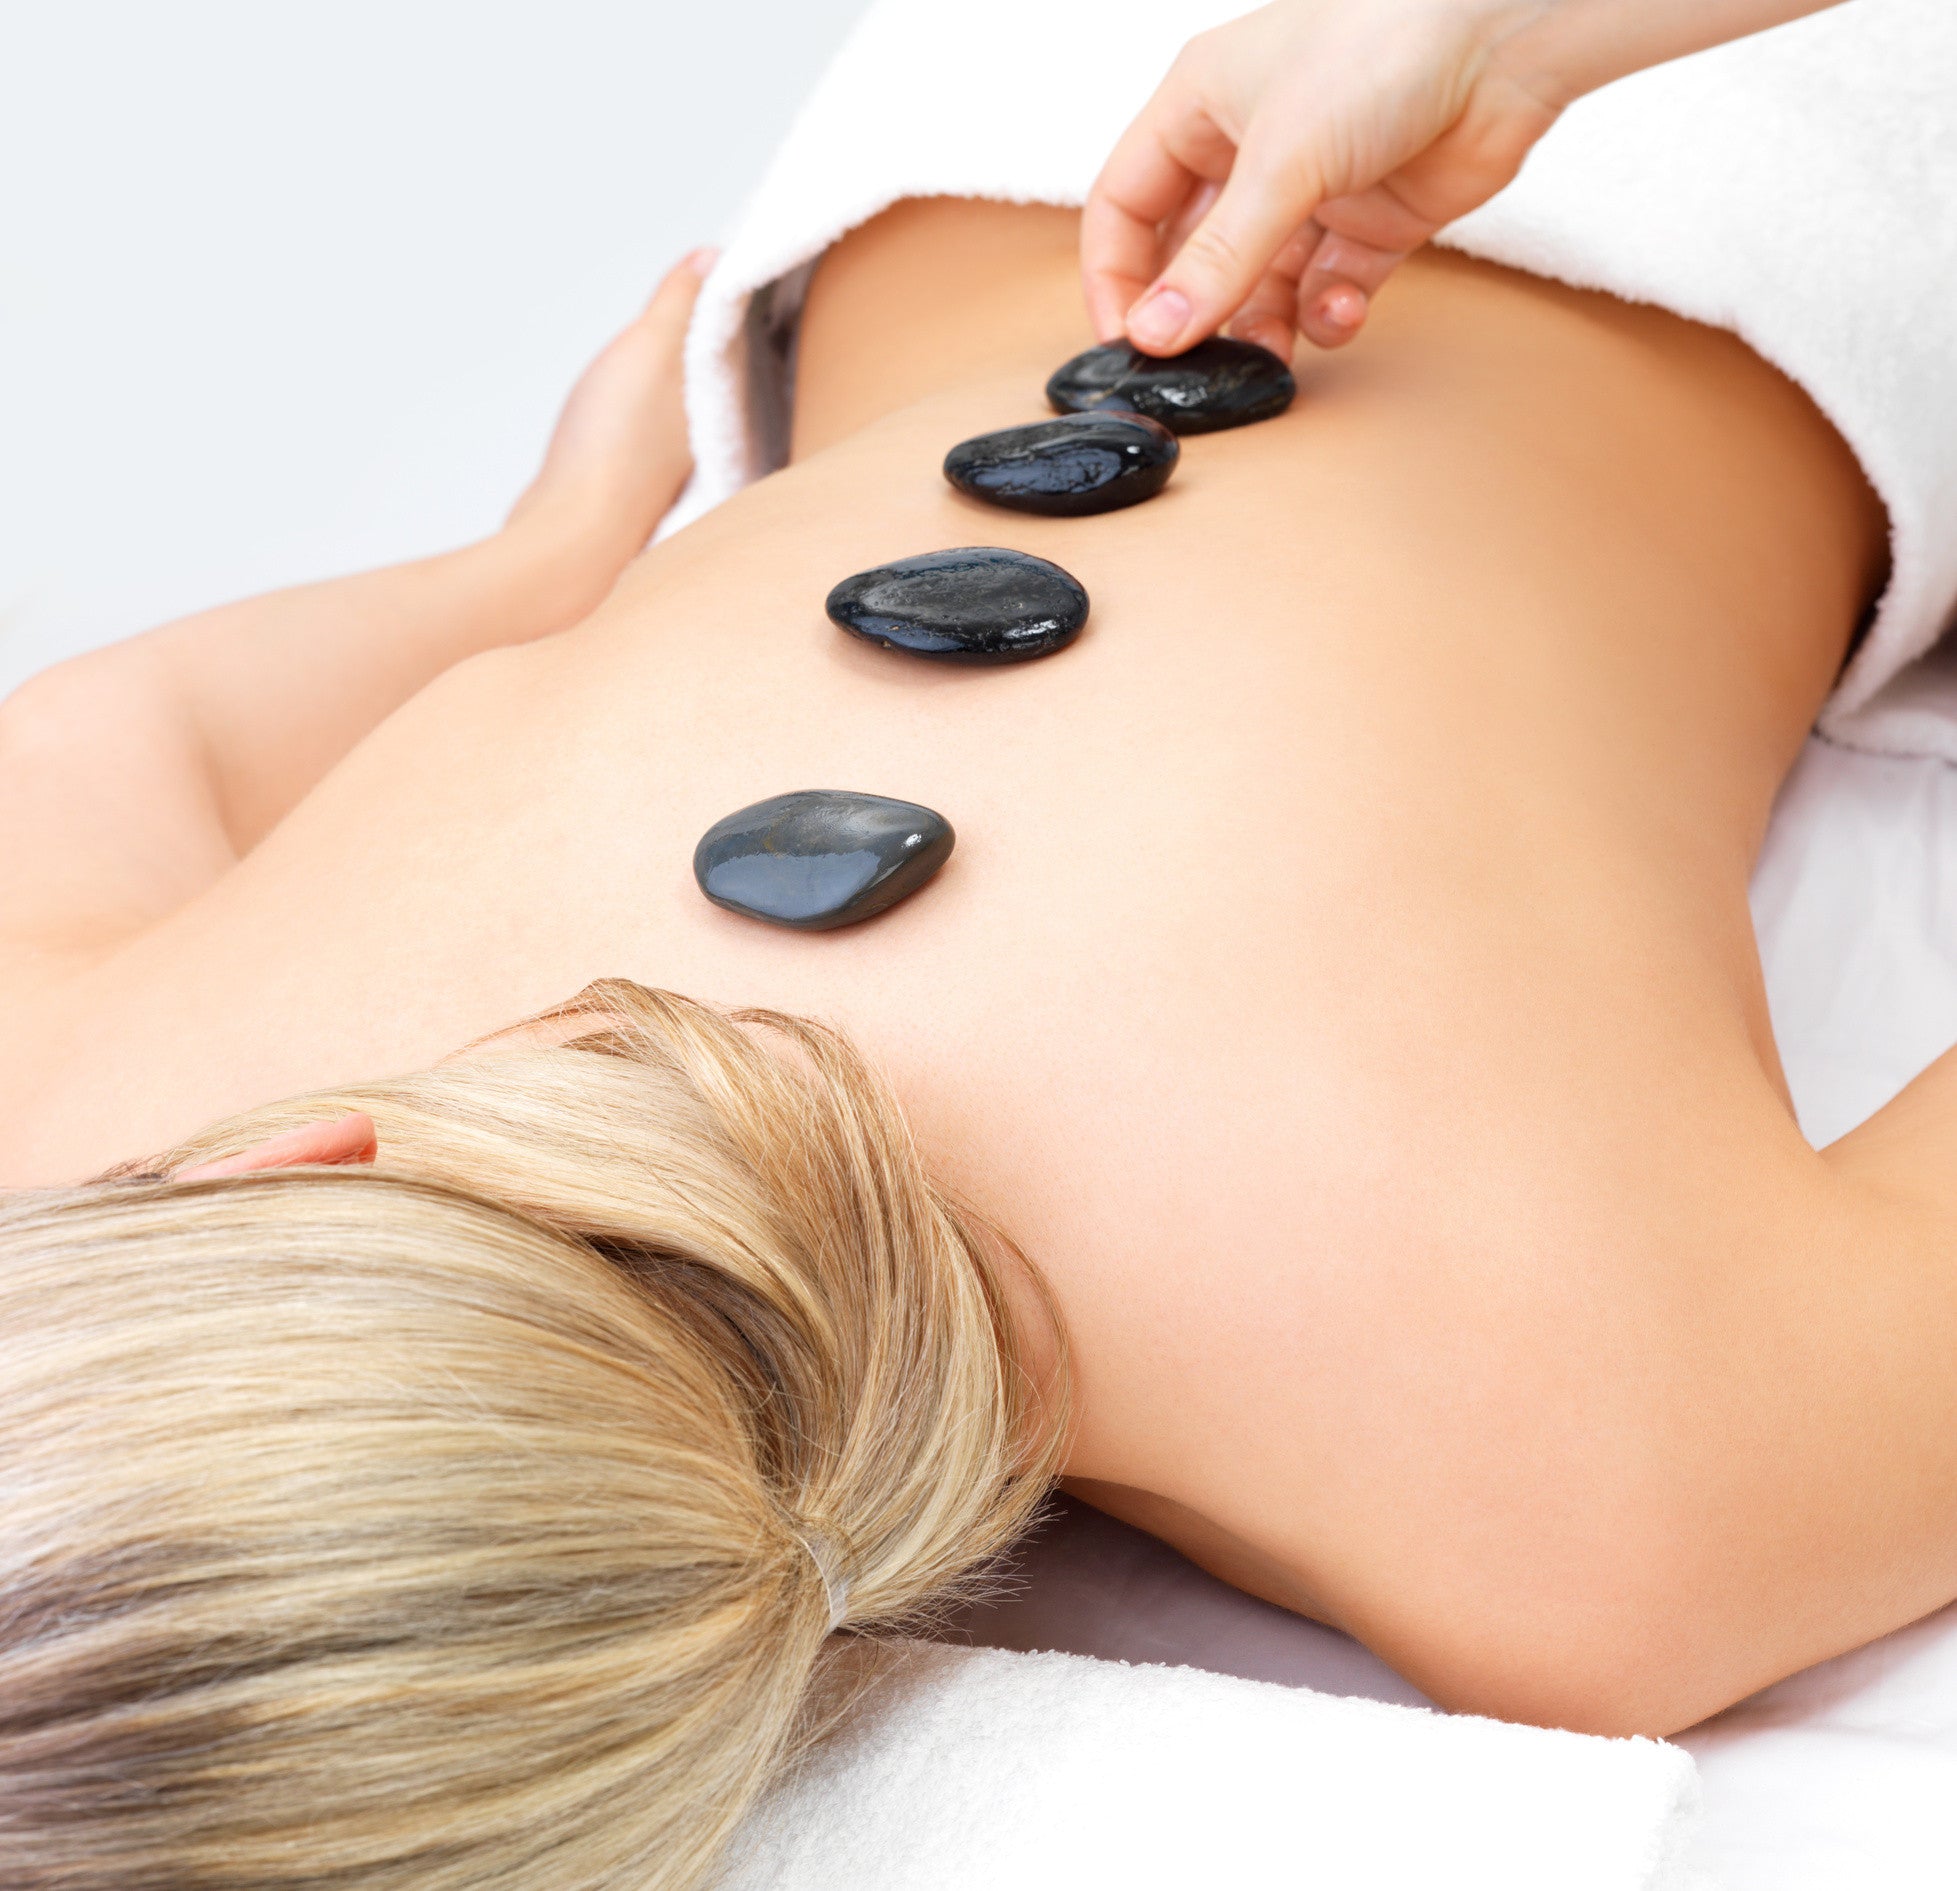 ESPA Hot Stones Relaxing Full Body Massage